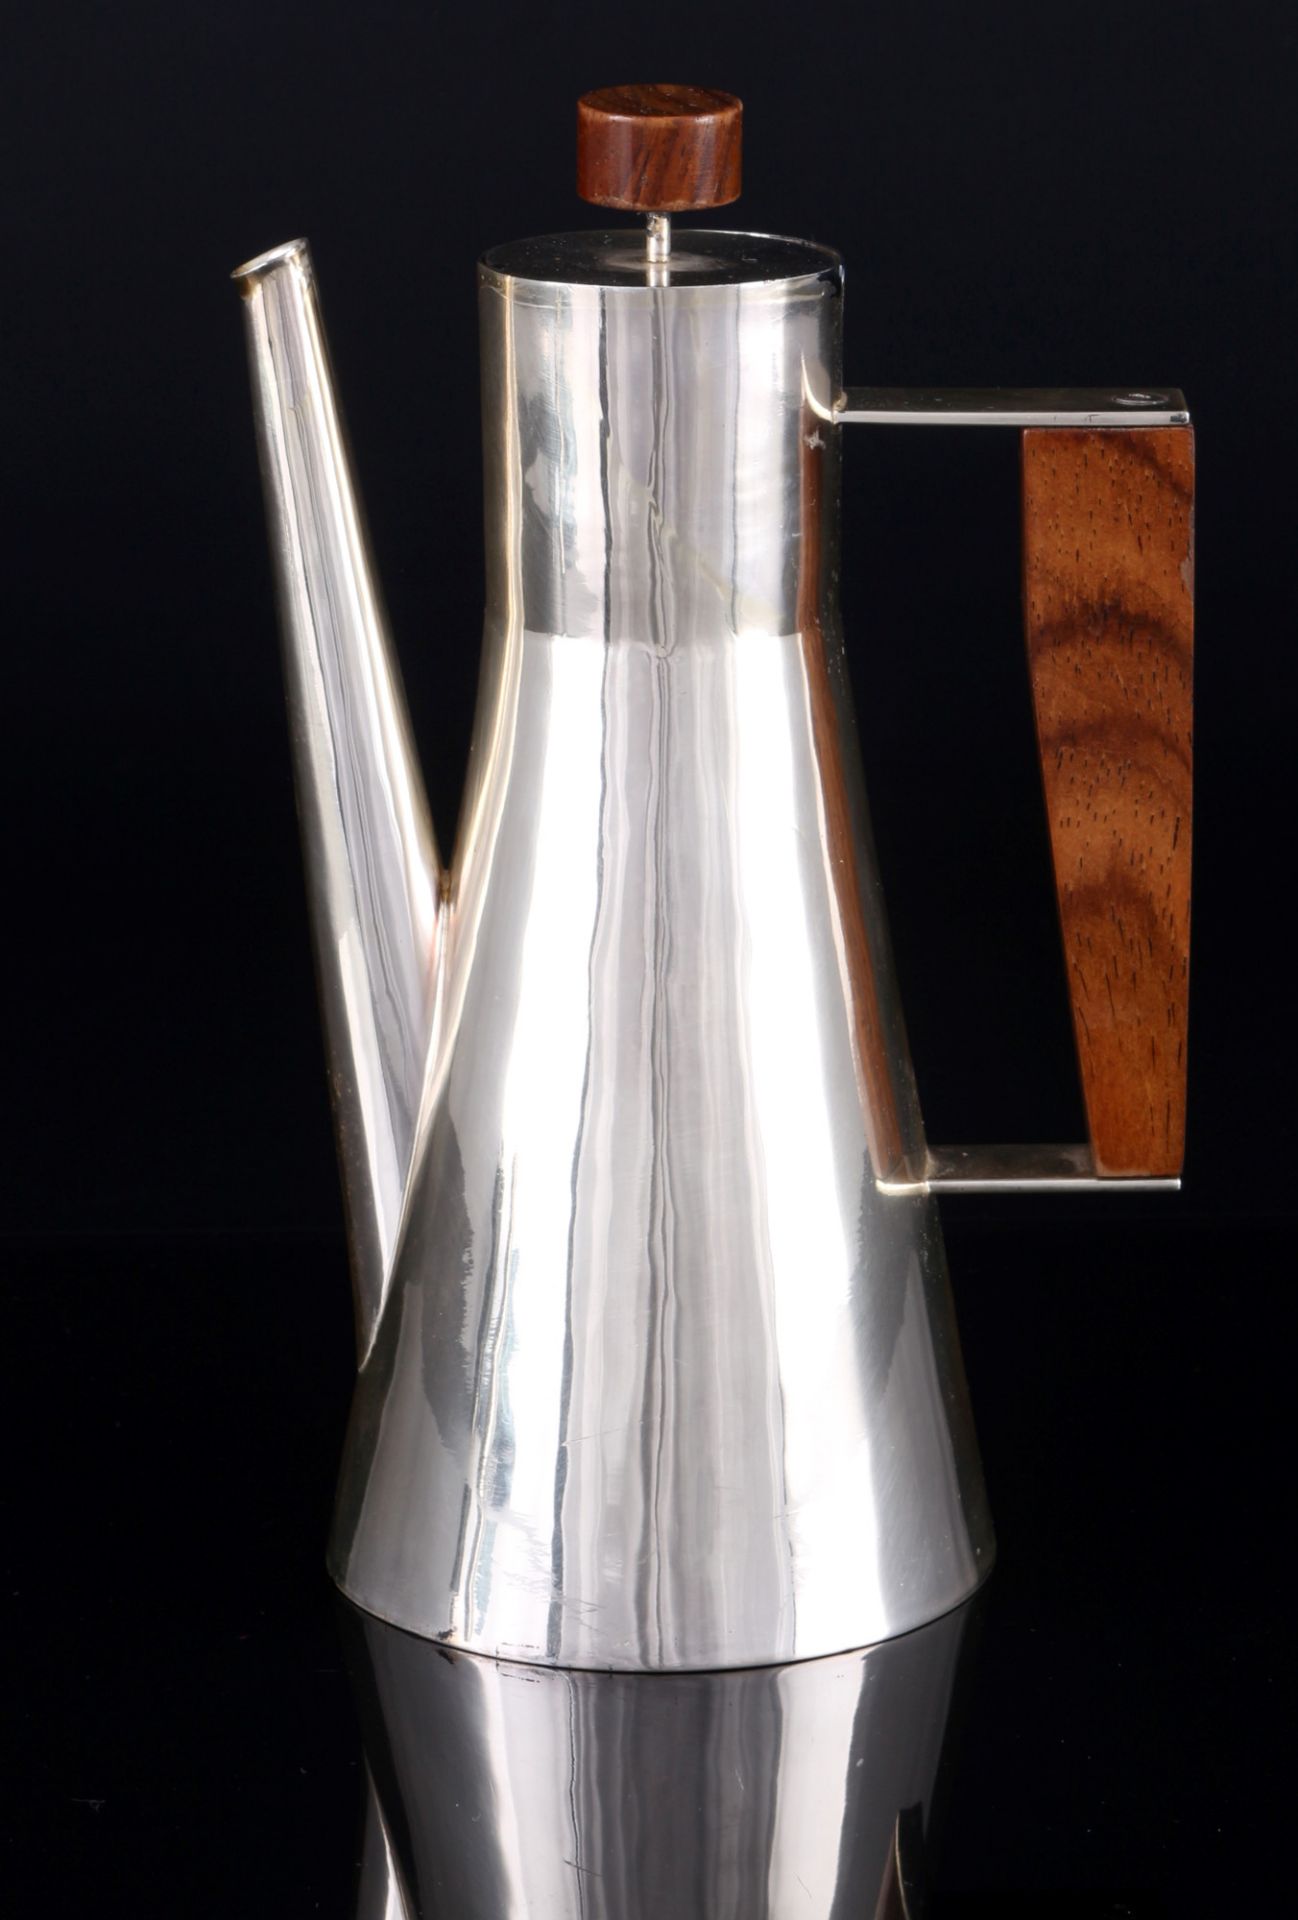 835 Silber Bauhaus Mokka Kaffeekern, silver mocha coffee set, - Bild 2 aus 4